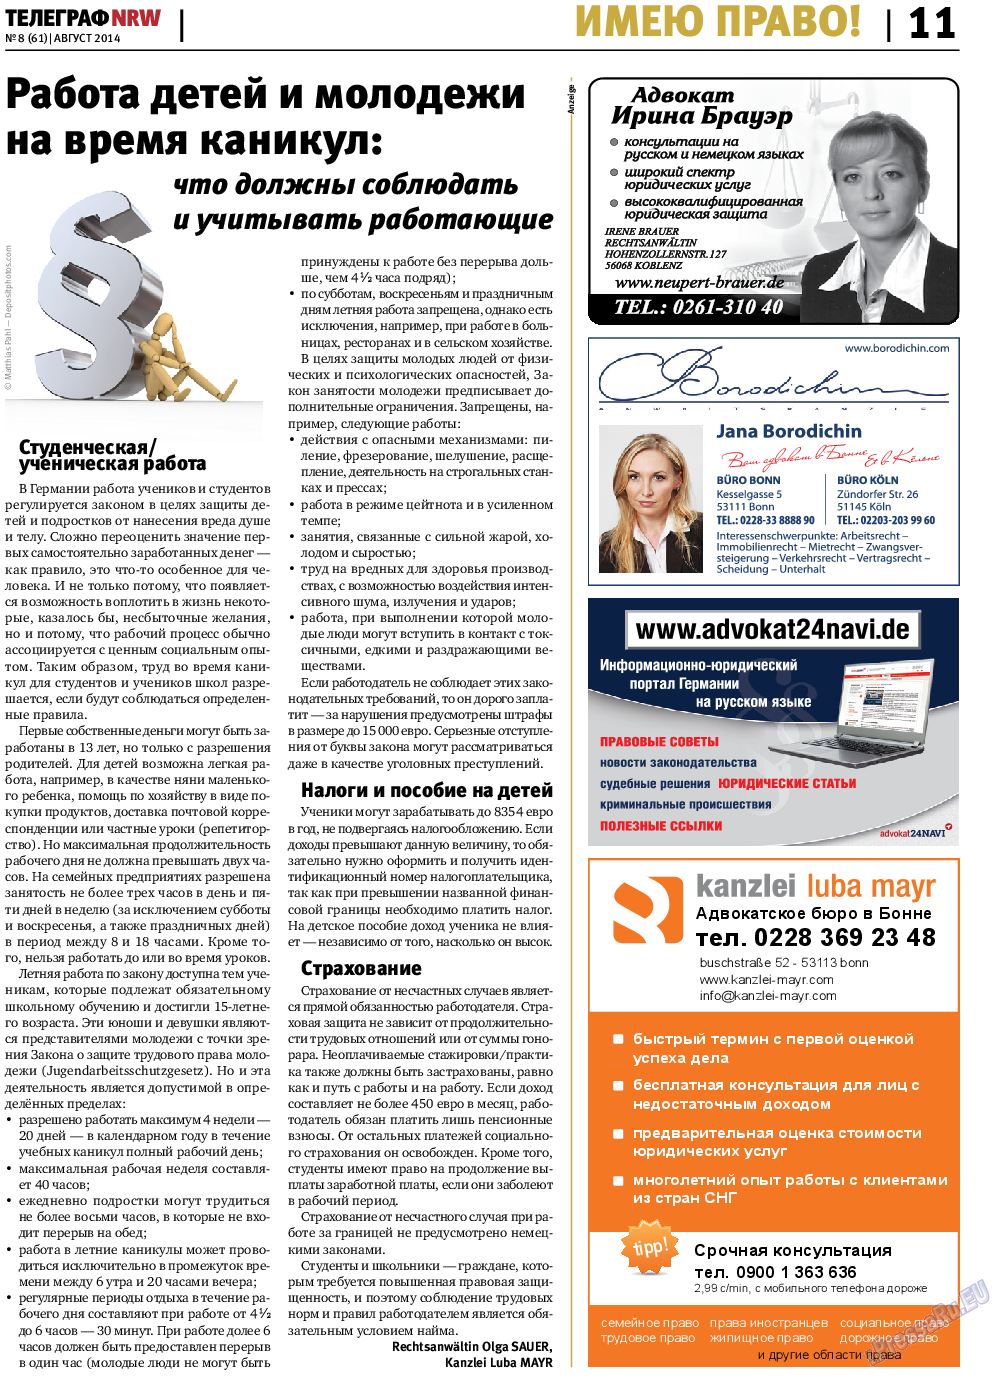 Телеграф NRW, газета. 2014 №8 стр.11